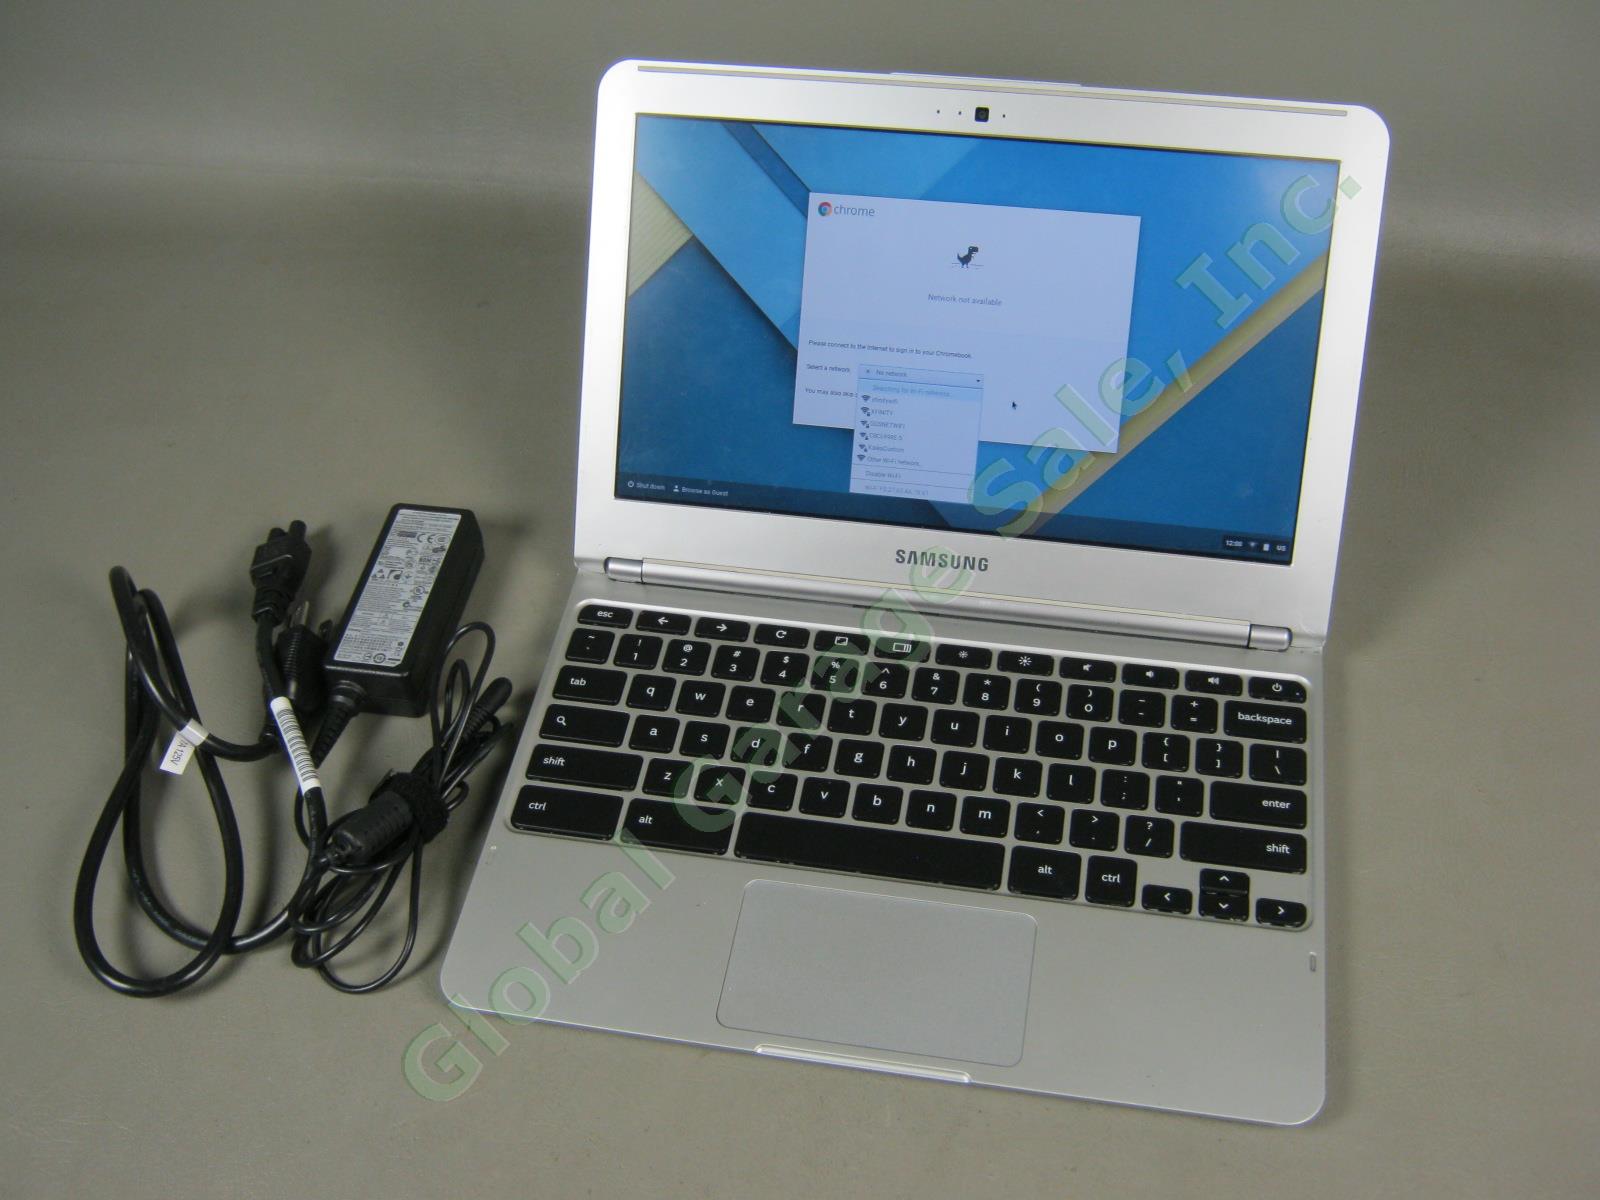 Samsung Chromebook Chrome Netbook Laptop XE303C12 11.6" 1.7GHz 2GB RAM 16GB NR!